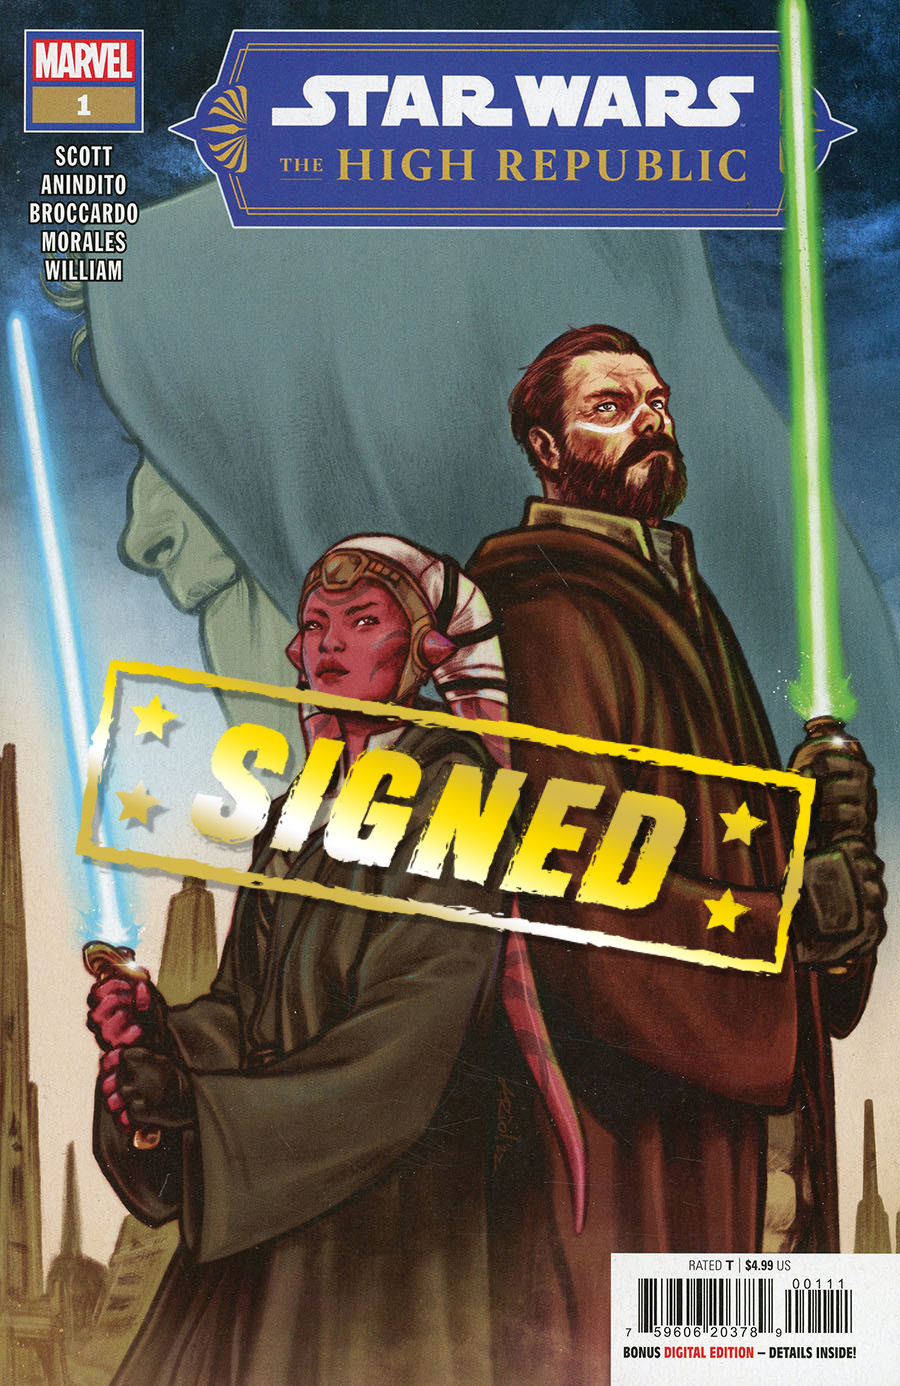 Star Wars The High Republic Vol 2 #1 Cover G Regular Ario Anindito Cover Signed By Ario Anindito